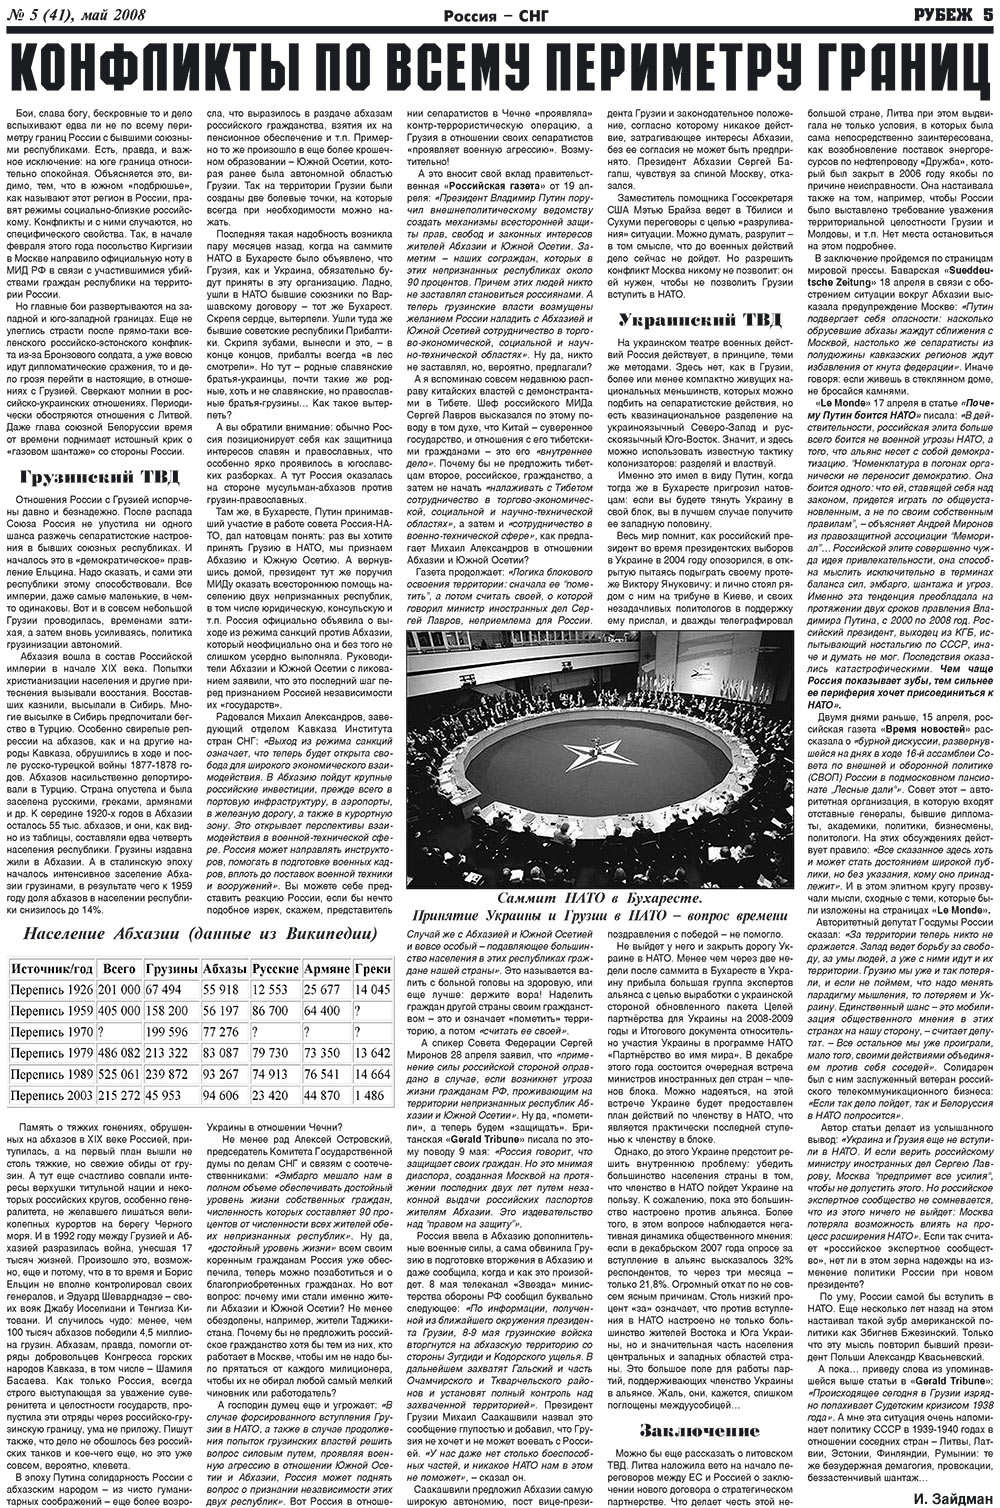 Рубеж, газета. 2008 №5 стр.5